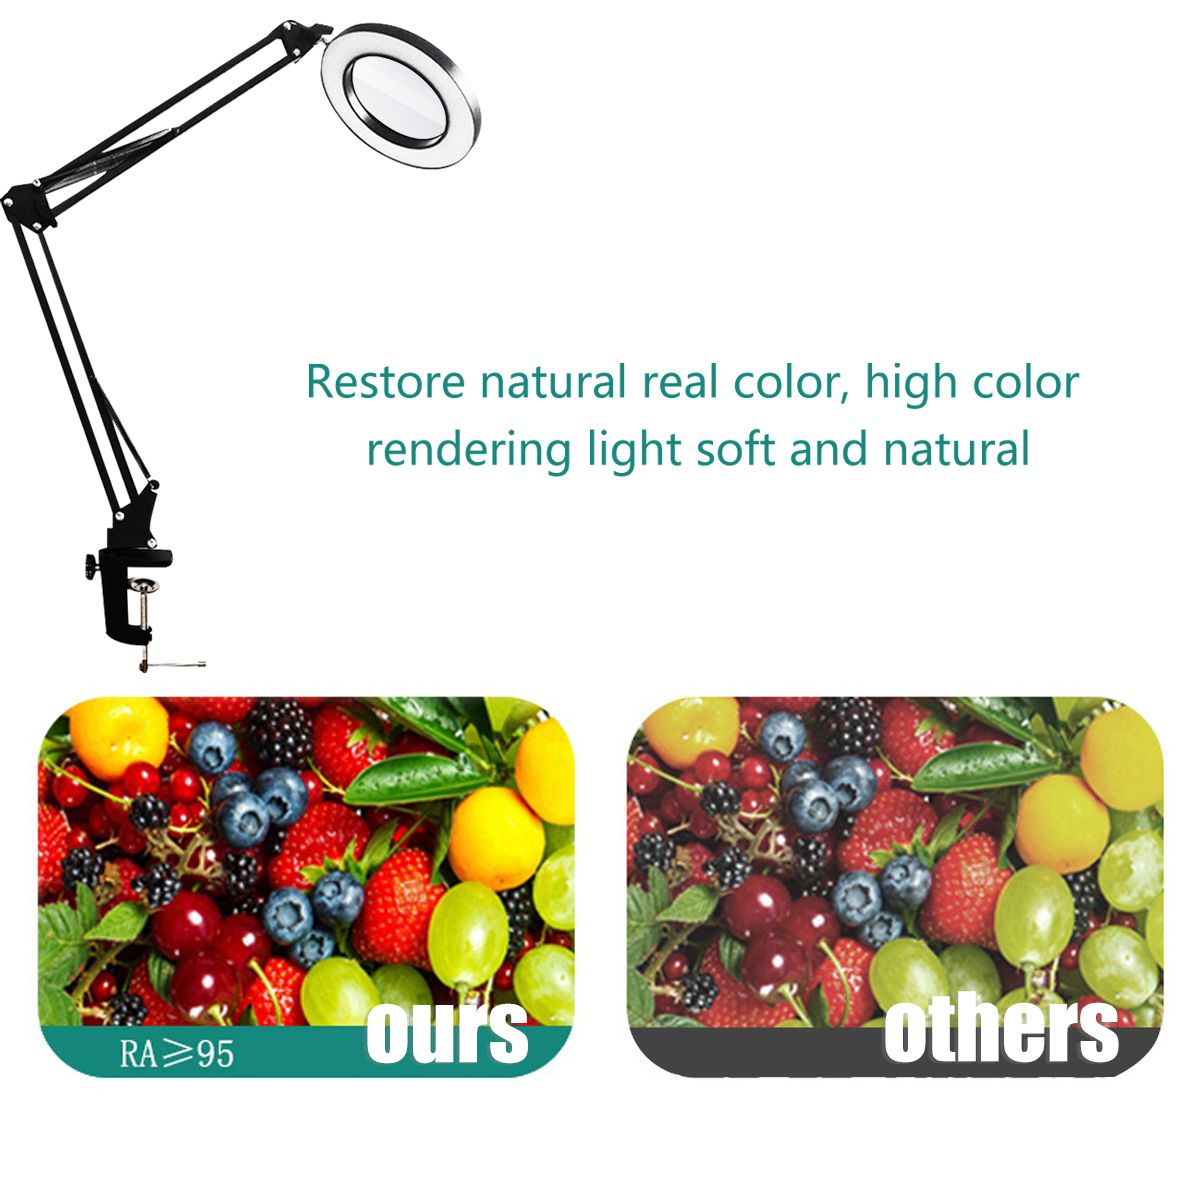 8X-Illuminated-Magnifier-USB-3-Colors-LED-Glass-Table-LampSkincare-Beauty-Tool-1653994